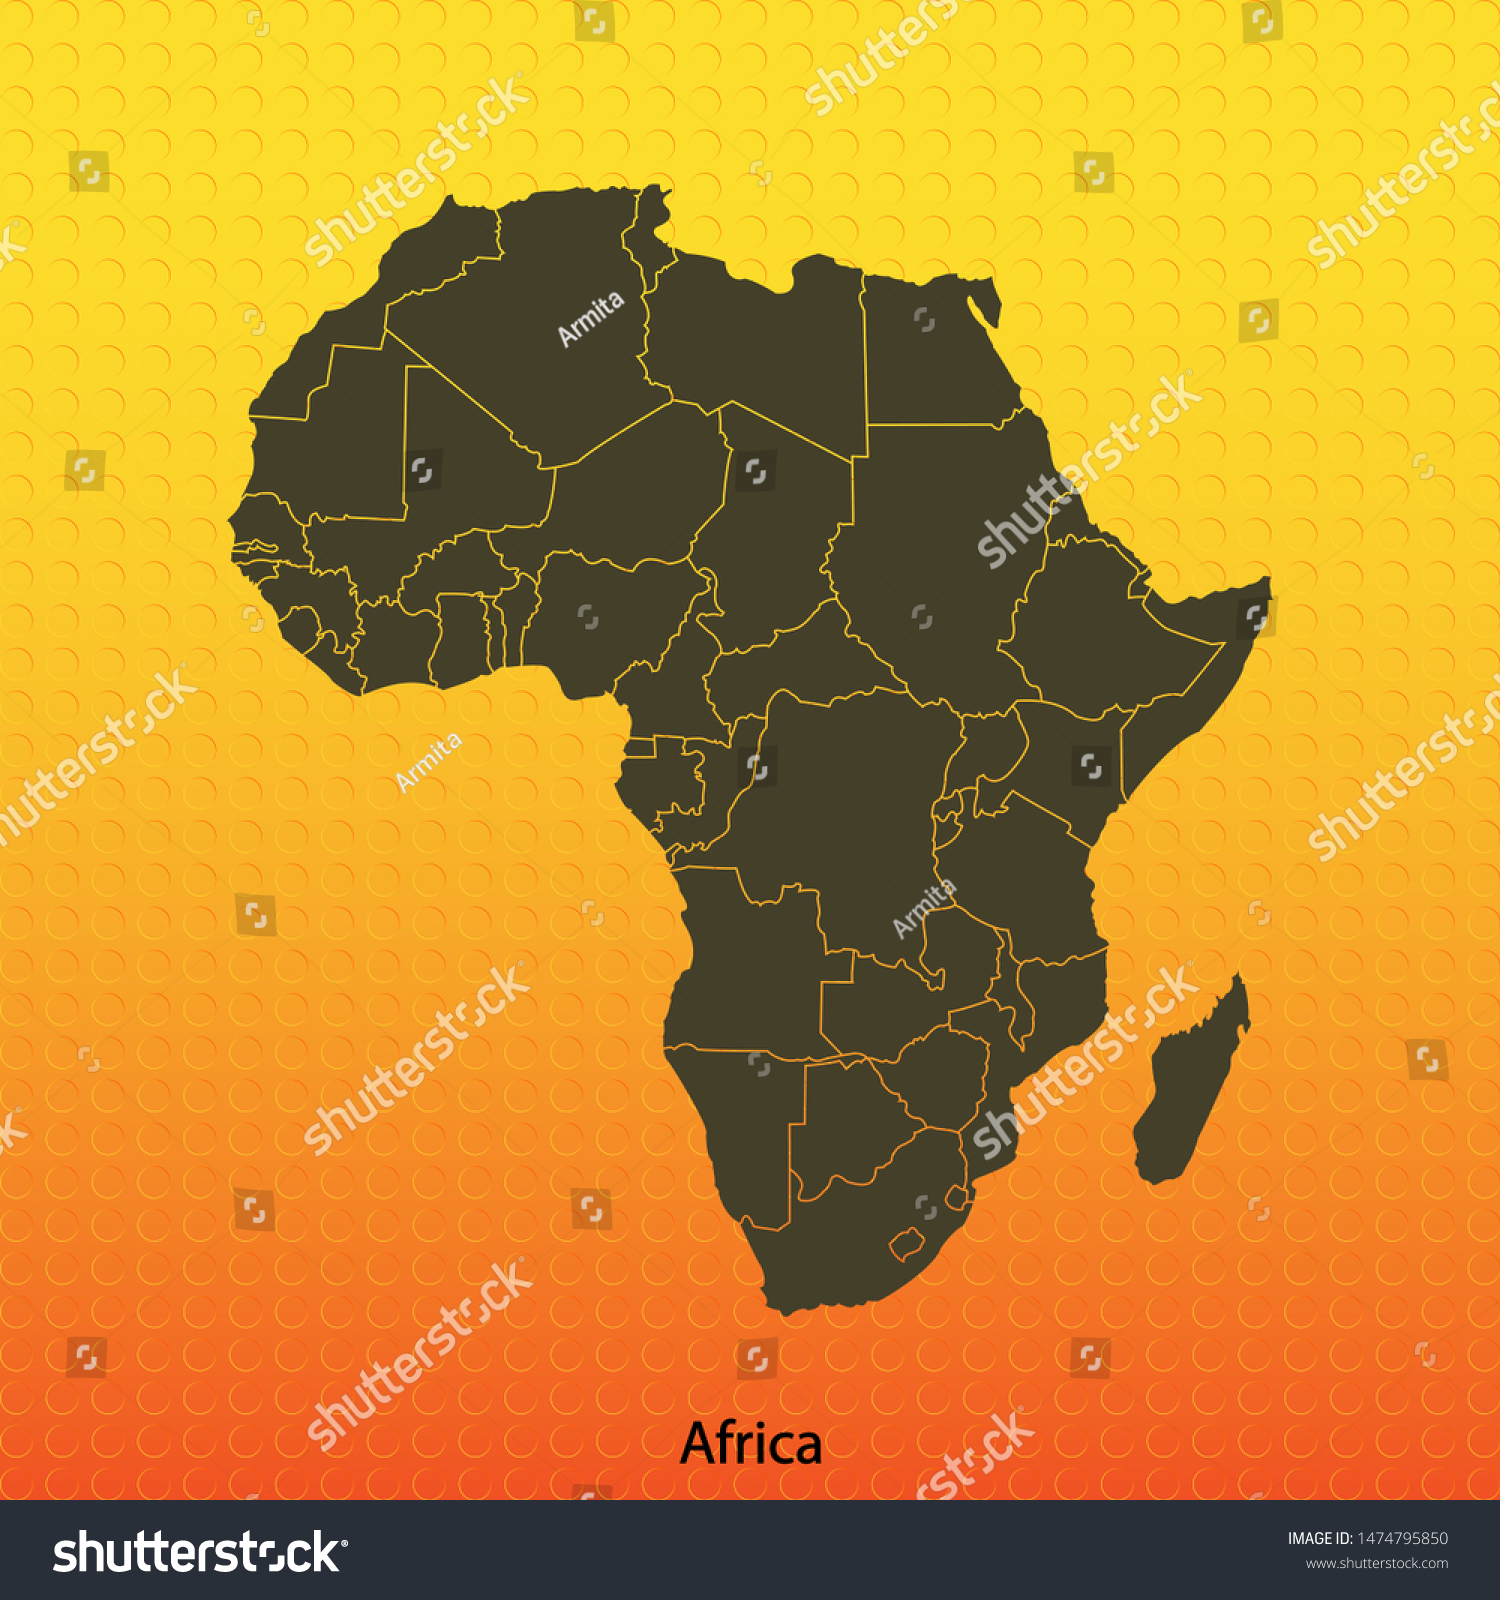 Map Africa Vector Illustration Stock Vector Royalty Free 1474795850 Shutterstock 5523